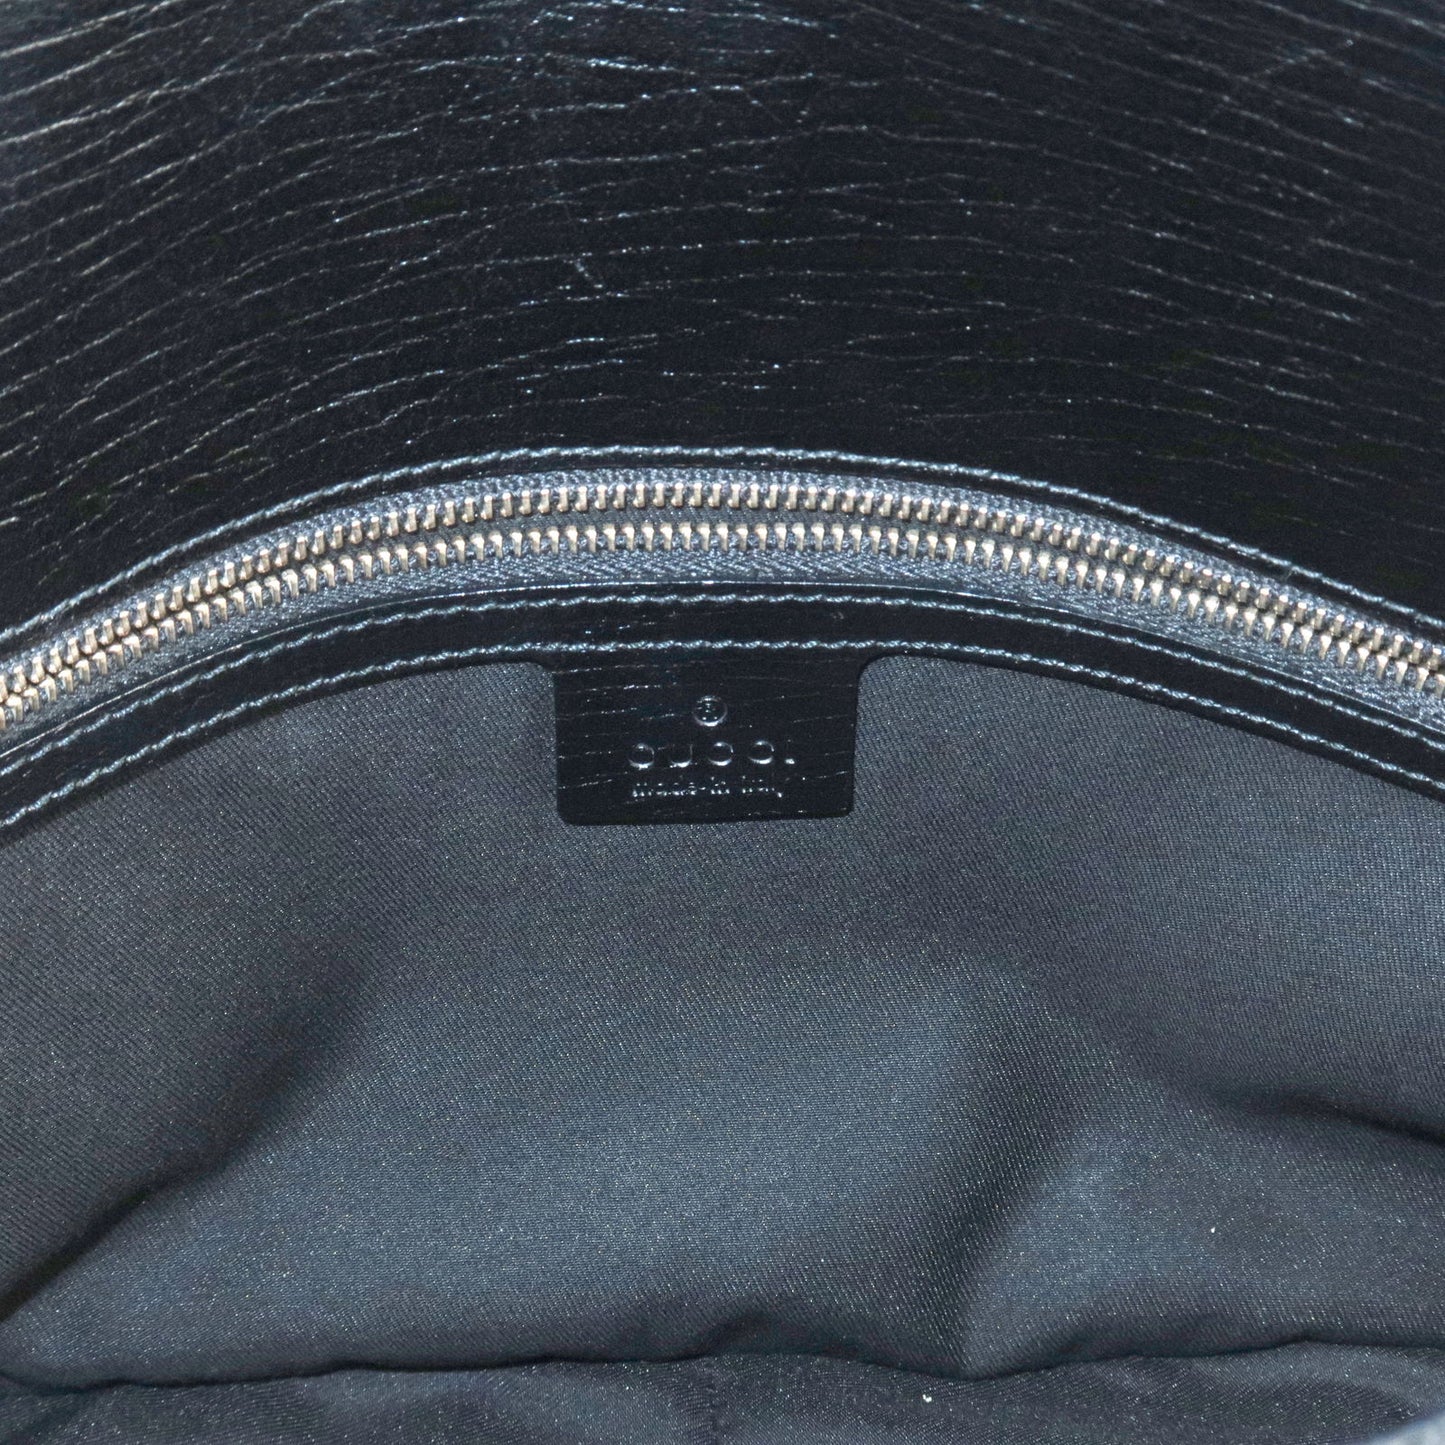 GUCCI Sherry Horsebit GG Canvas Leather Shoulder Bag Black 131474